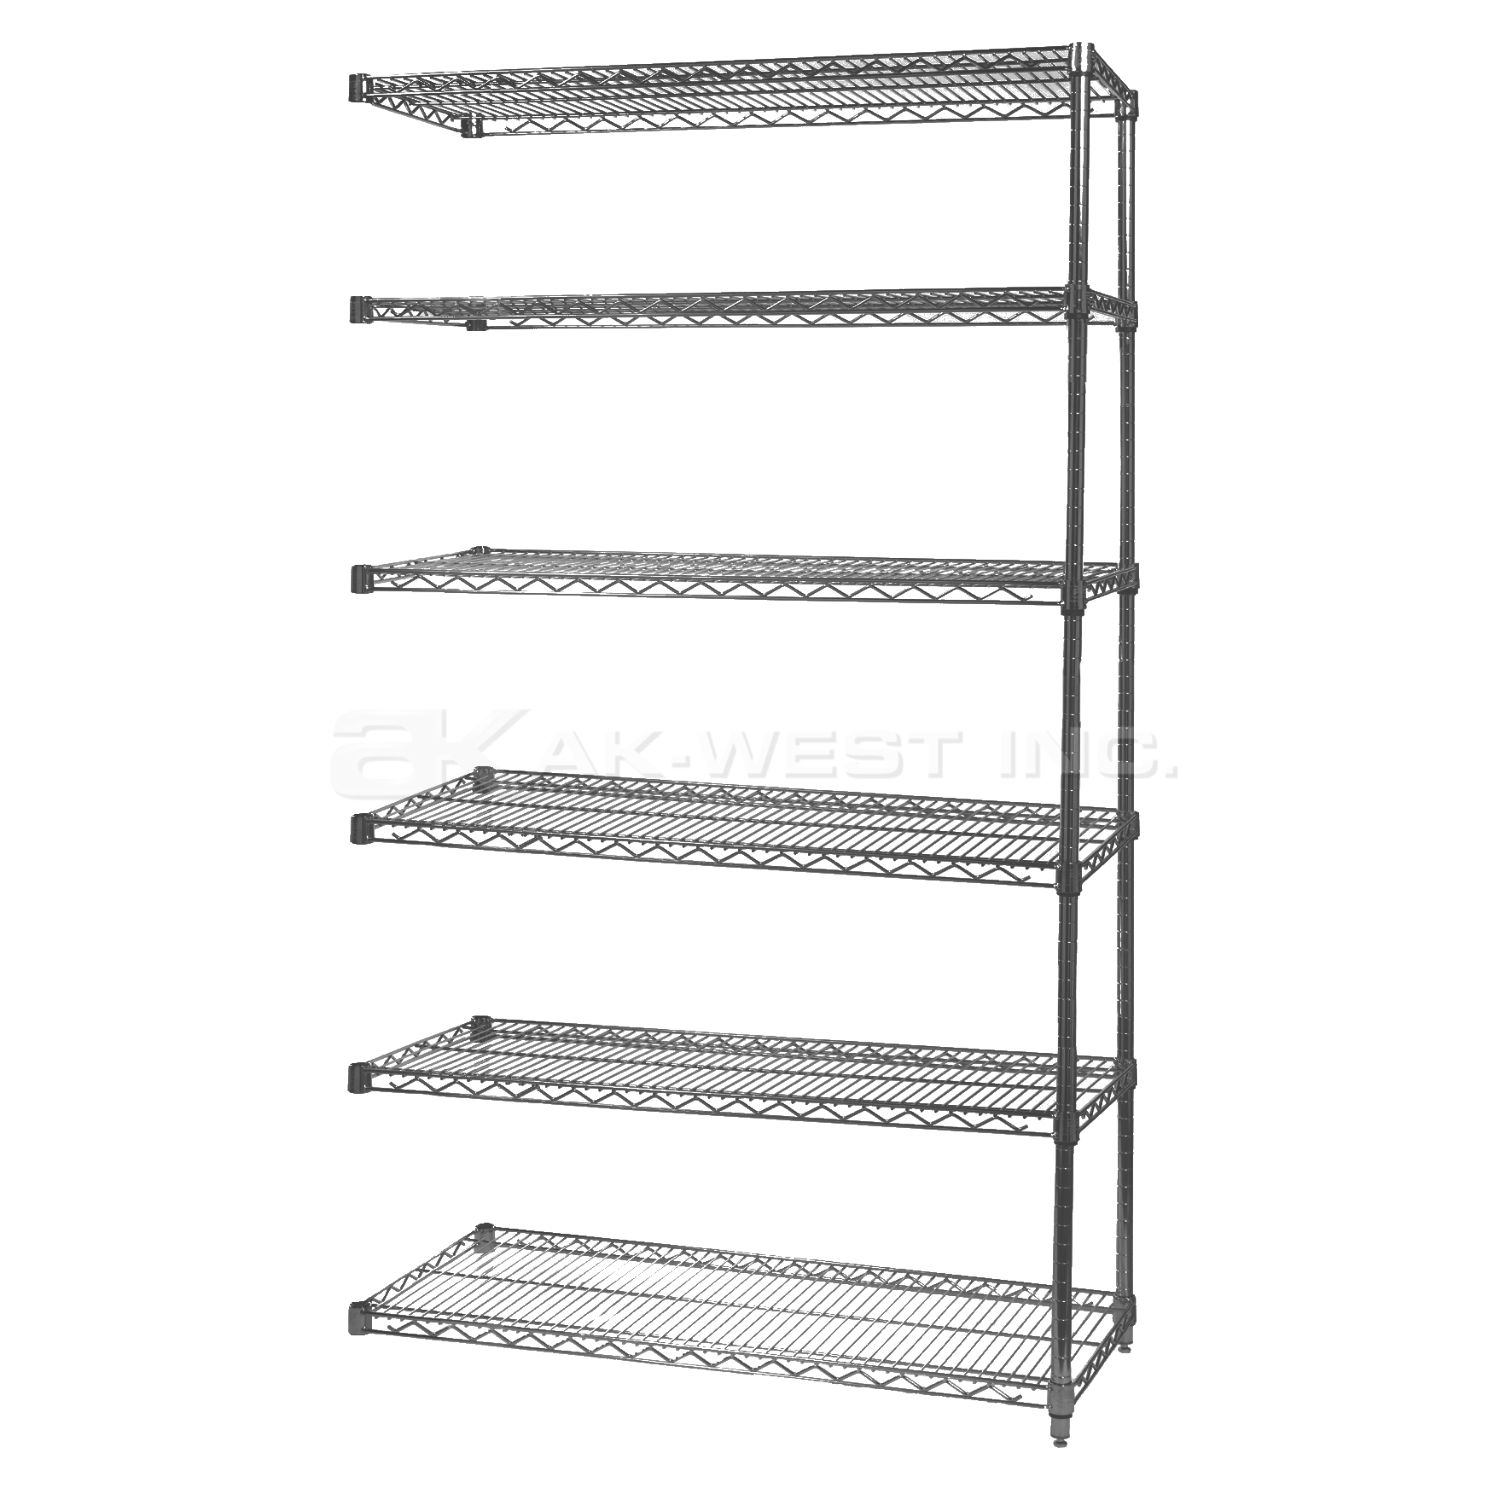 Grey, 12"D x 48"W x 86"H, 6 Shelf, Wire Shelving Adder Kit